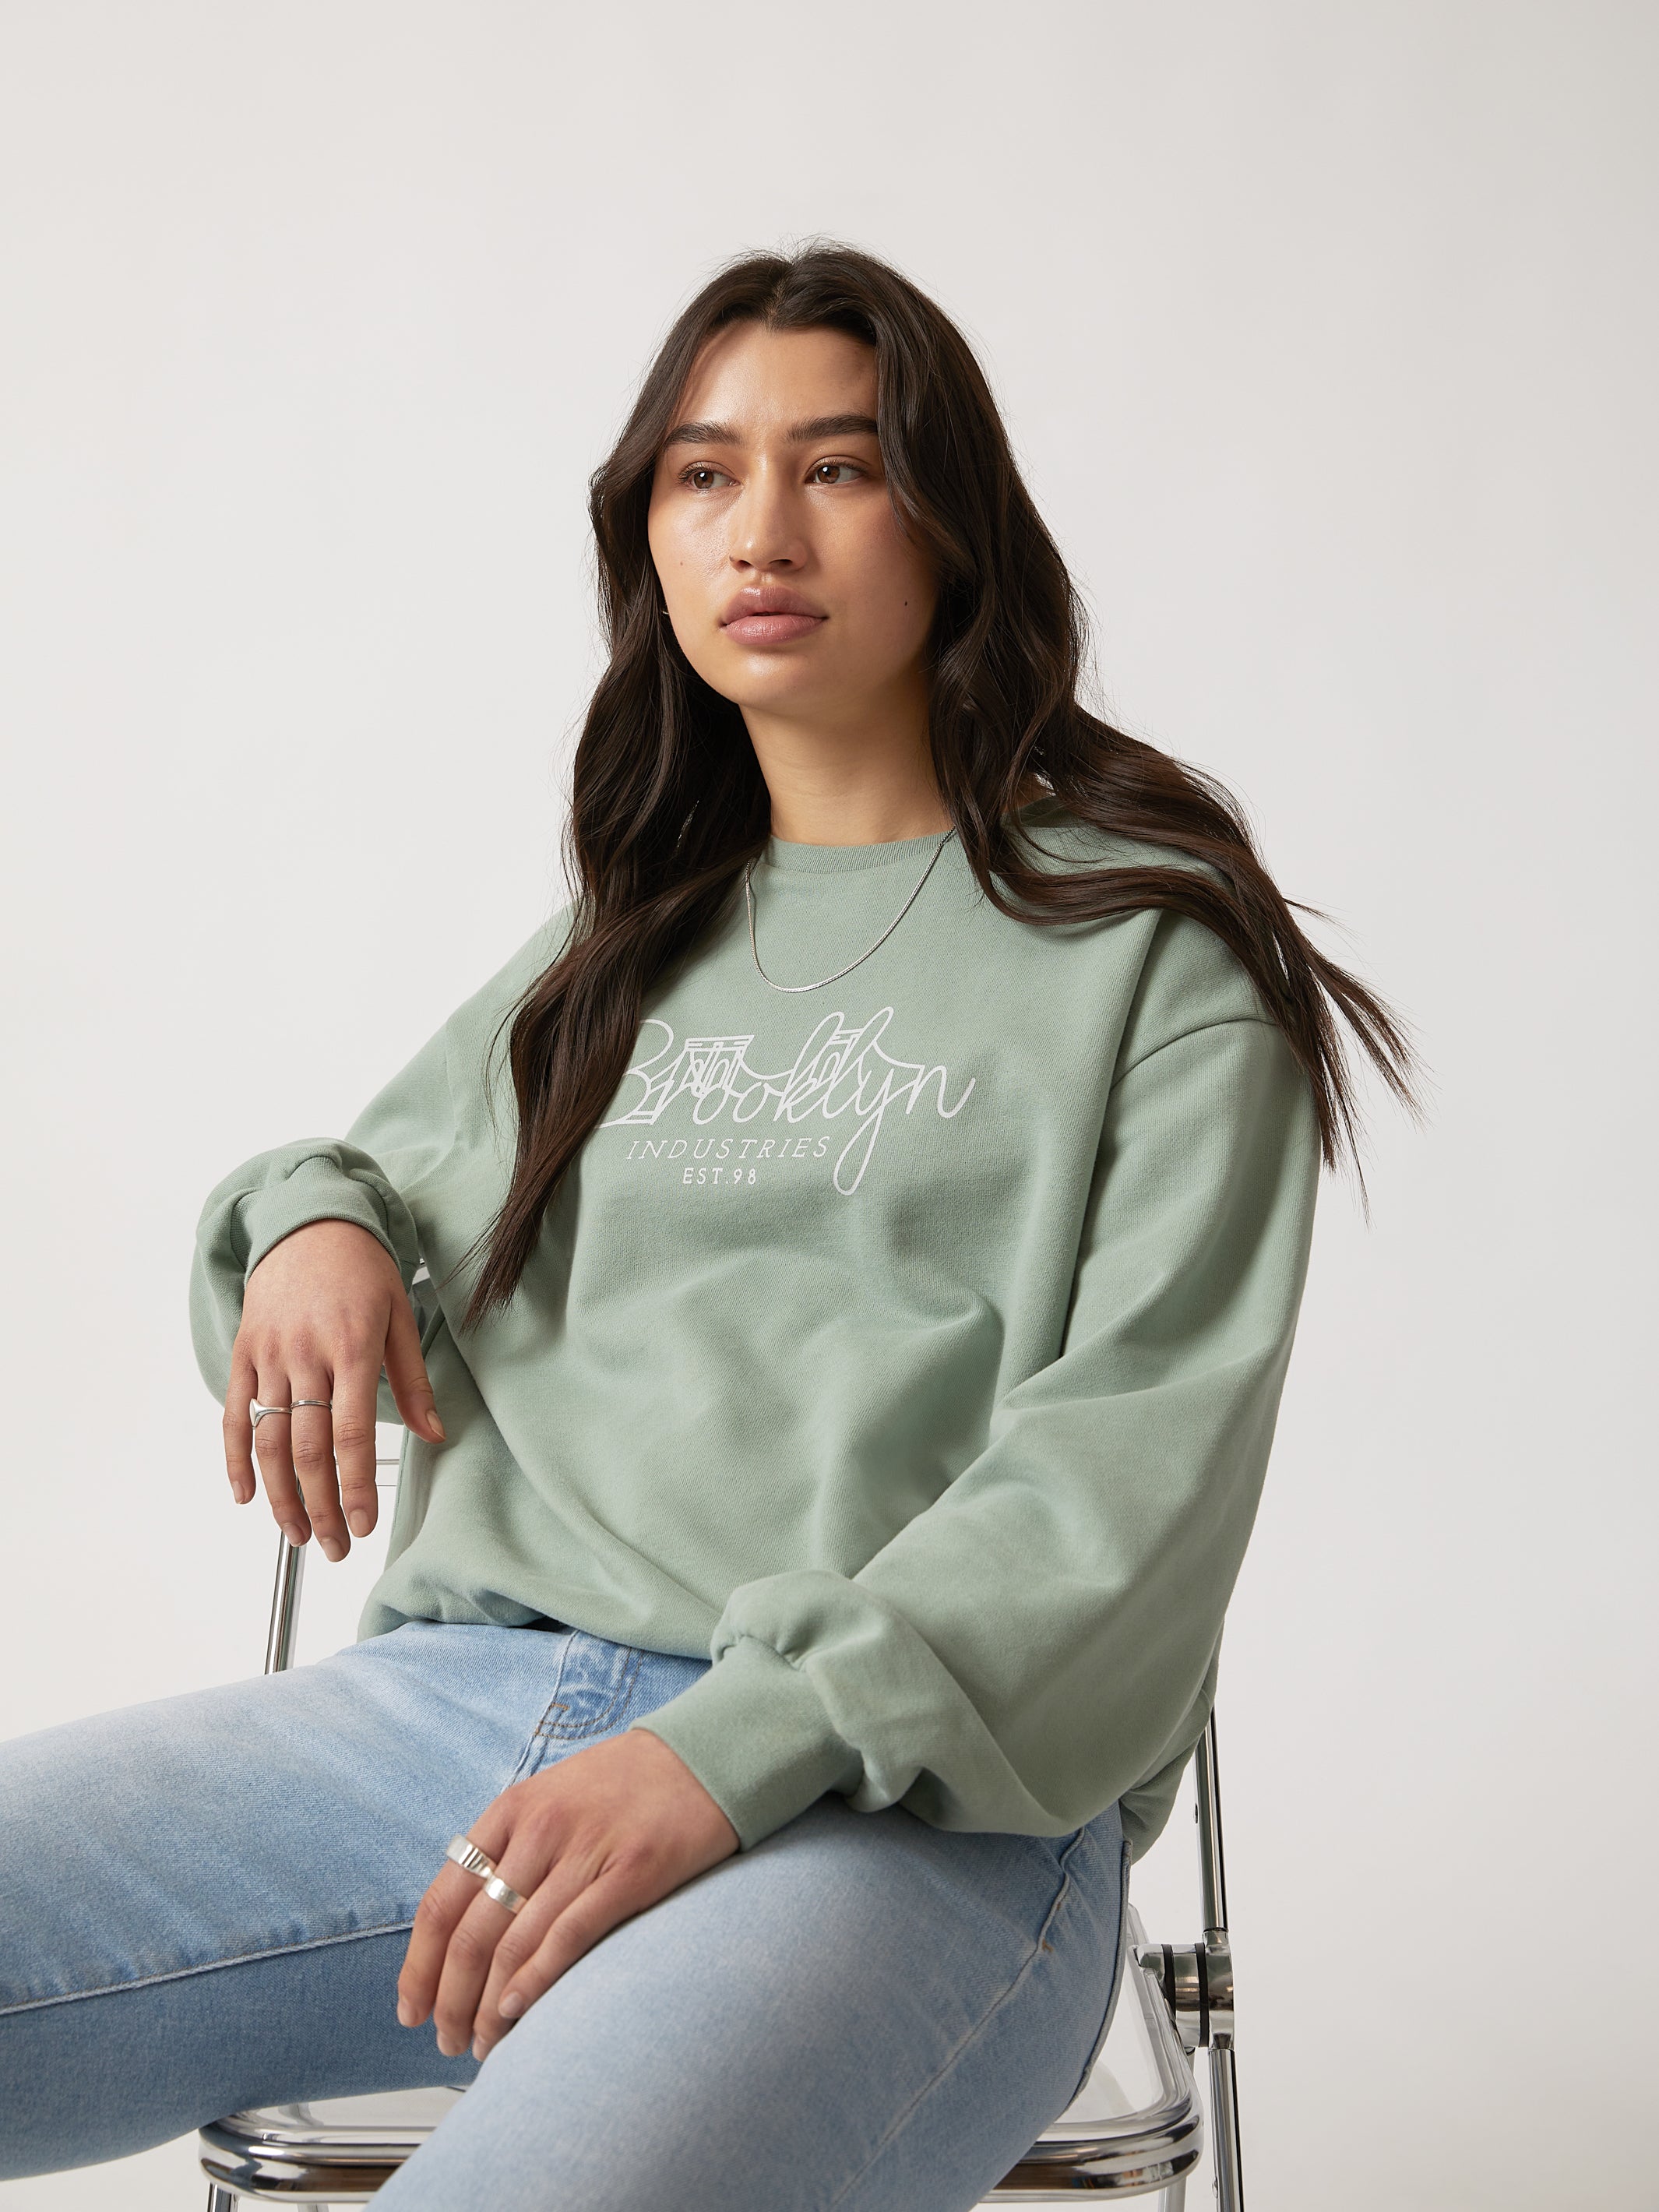 Women's Brooklyn Bridge Sweatshirt in Green Milieu - BROOKLYN INDUSTRIES